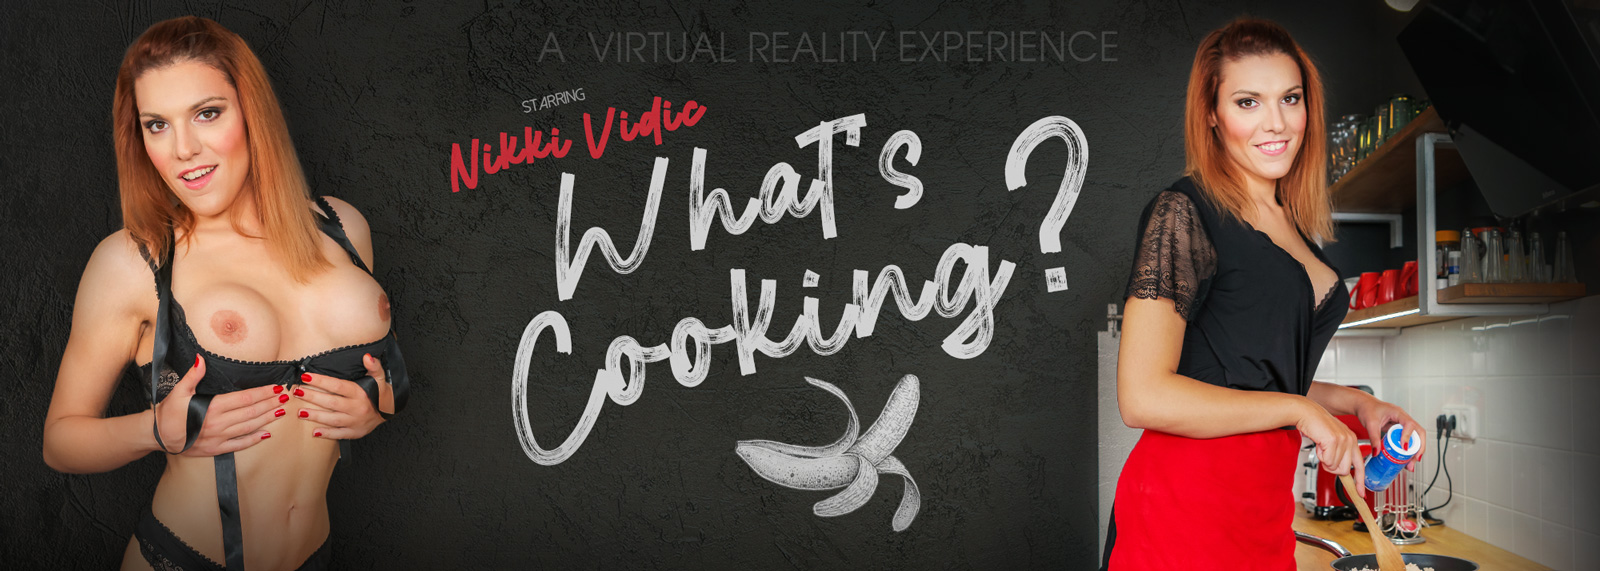 What's Cooking? - VR Porn Video, Starring: Nikki Vidic VR